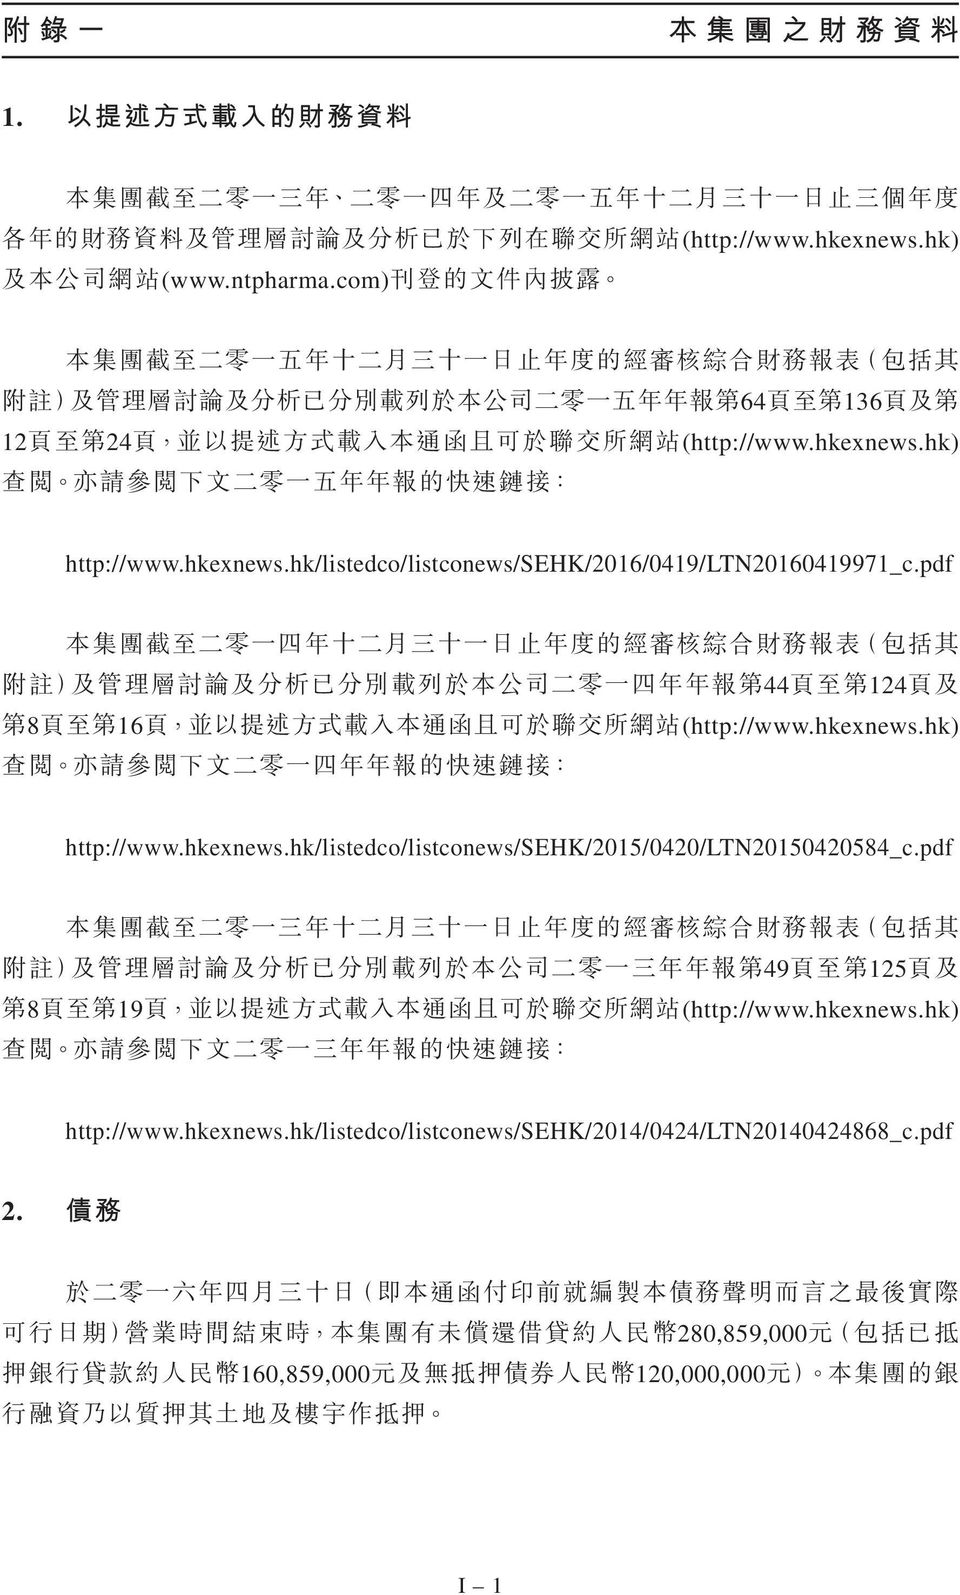 pdf 49125 819(http://www.hkexnews.hk) http://www.hkexnews.hk/listedco/listconews/sehk/2014/0424/ltn20140424868_c.